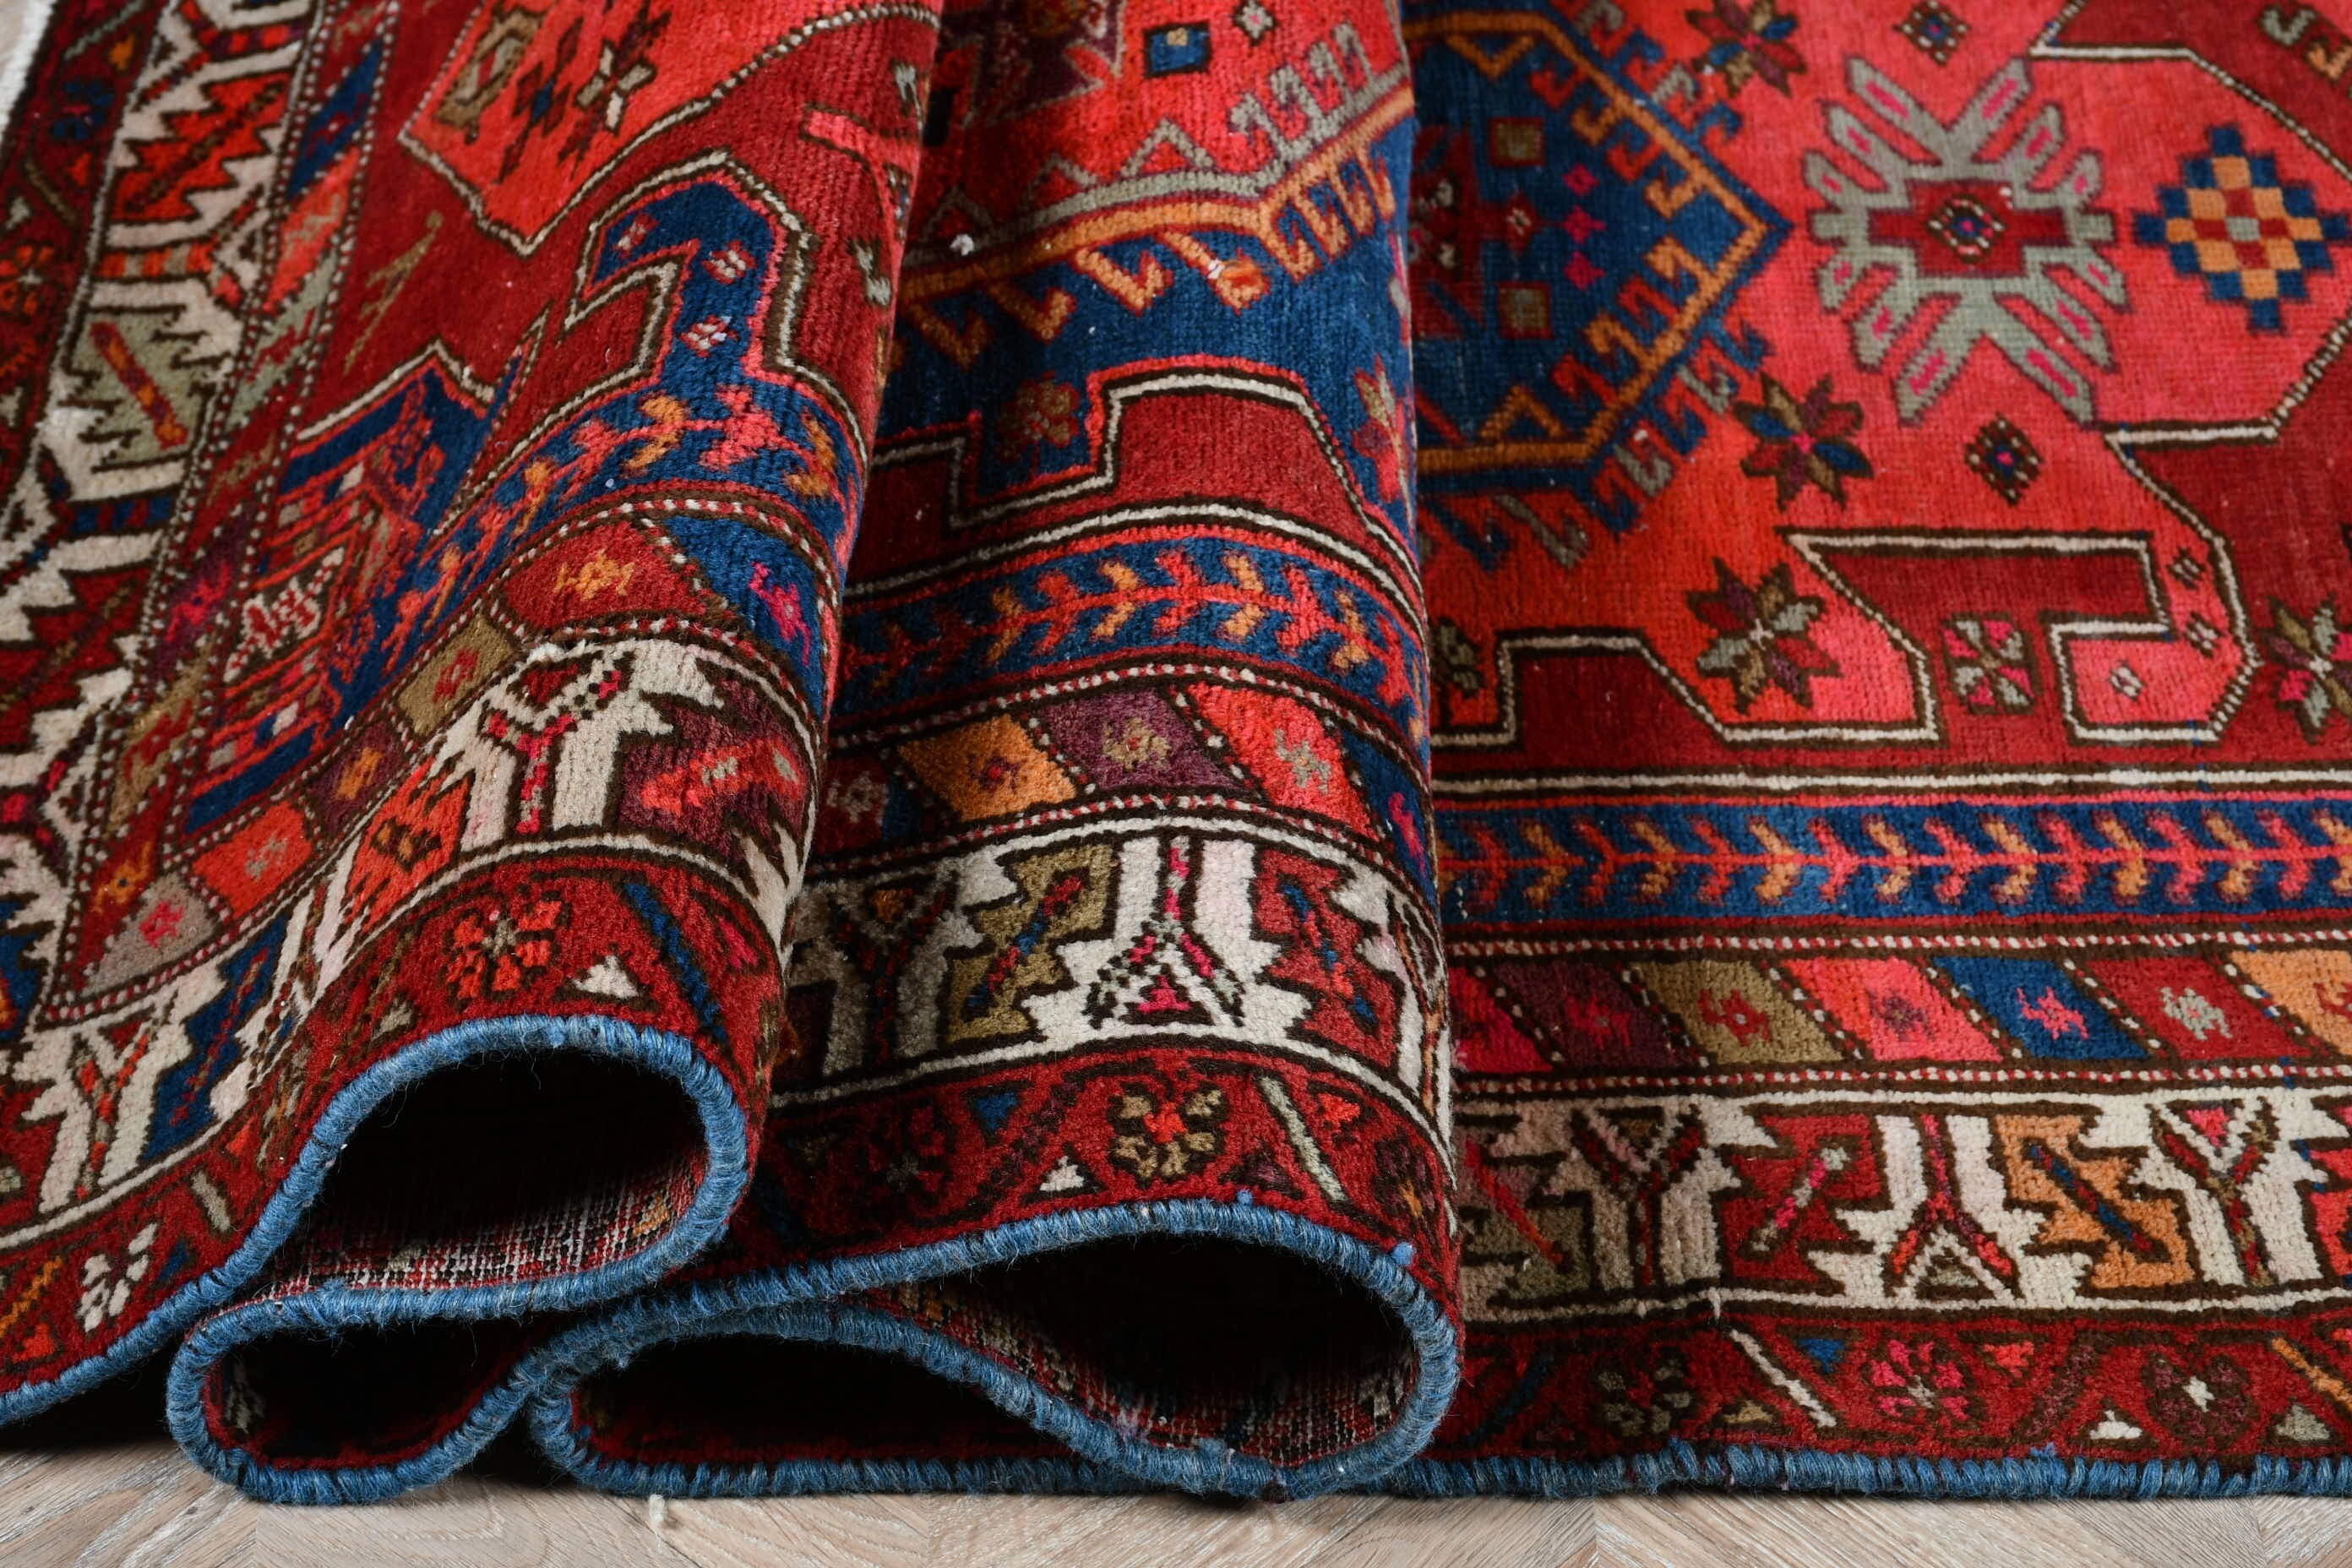 Aztec Rug, Kitchen Rugs, Home Decor Rug, Anatolian Rug, Corridor Rugs, 3.8x11.1 ft Runner Rug, Vintage Rug, Turkish Rugs, Red Moroccan Rugs